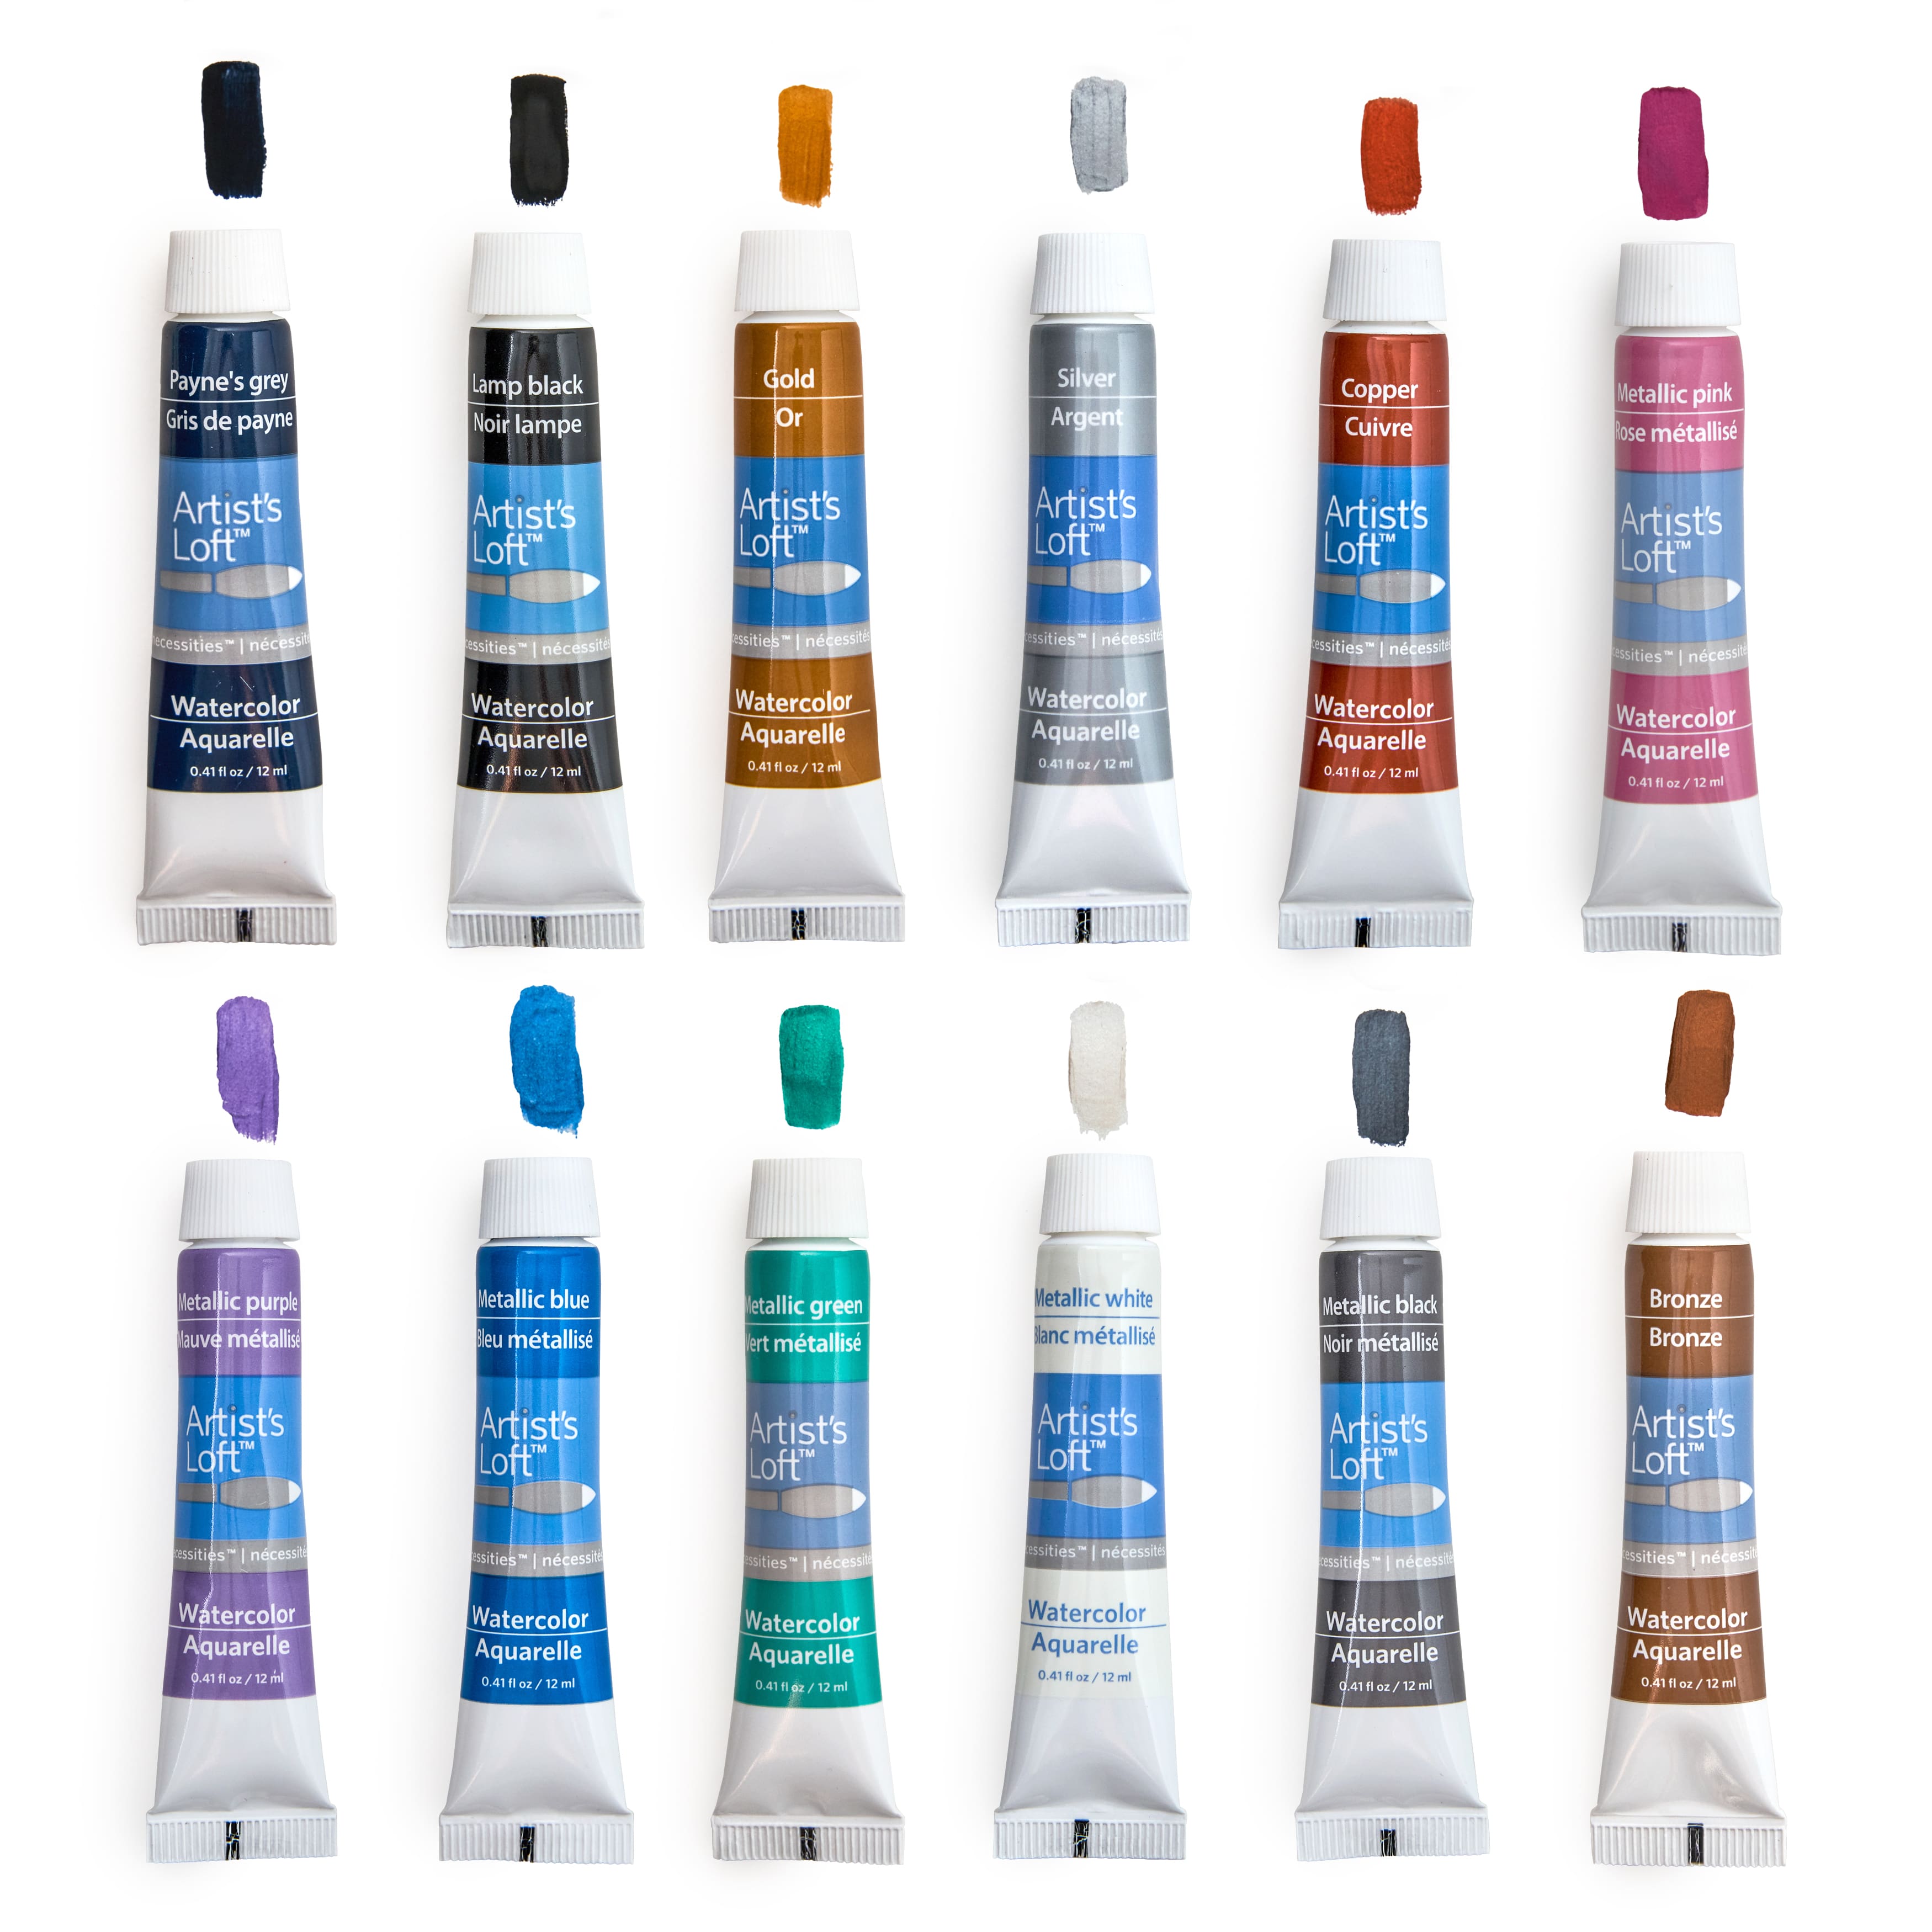 36 Color Watercolor Paint Value Pack by Artist&#x27;s Loft&#x2122; Necessities&#x2122;